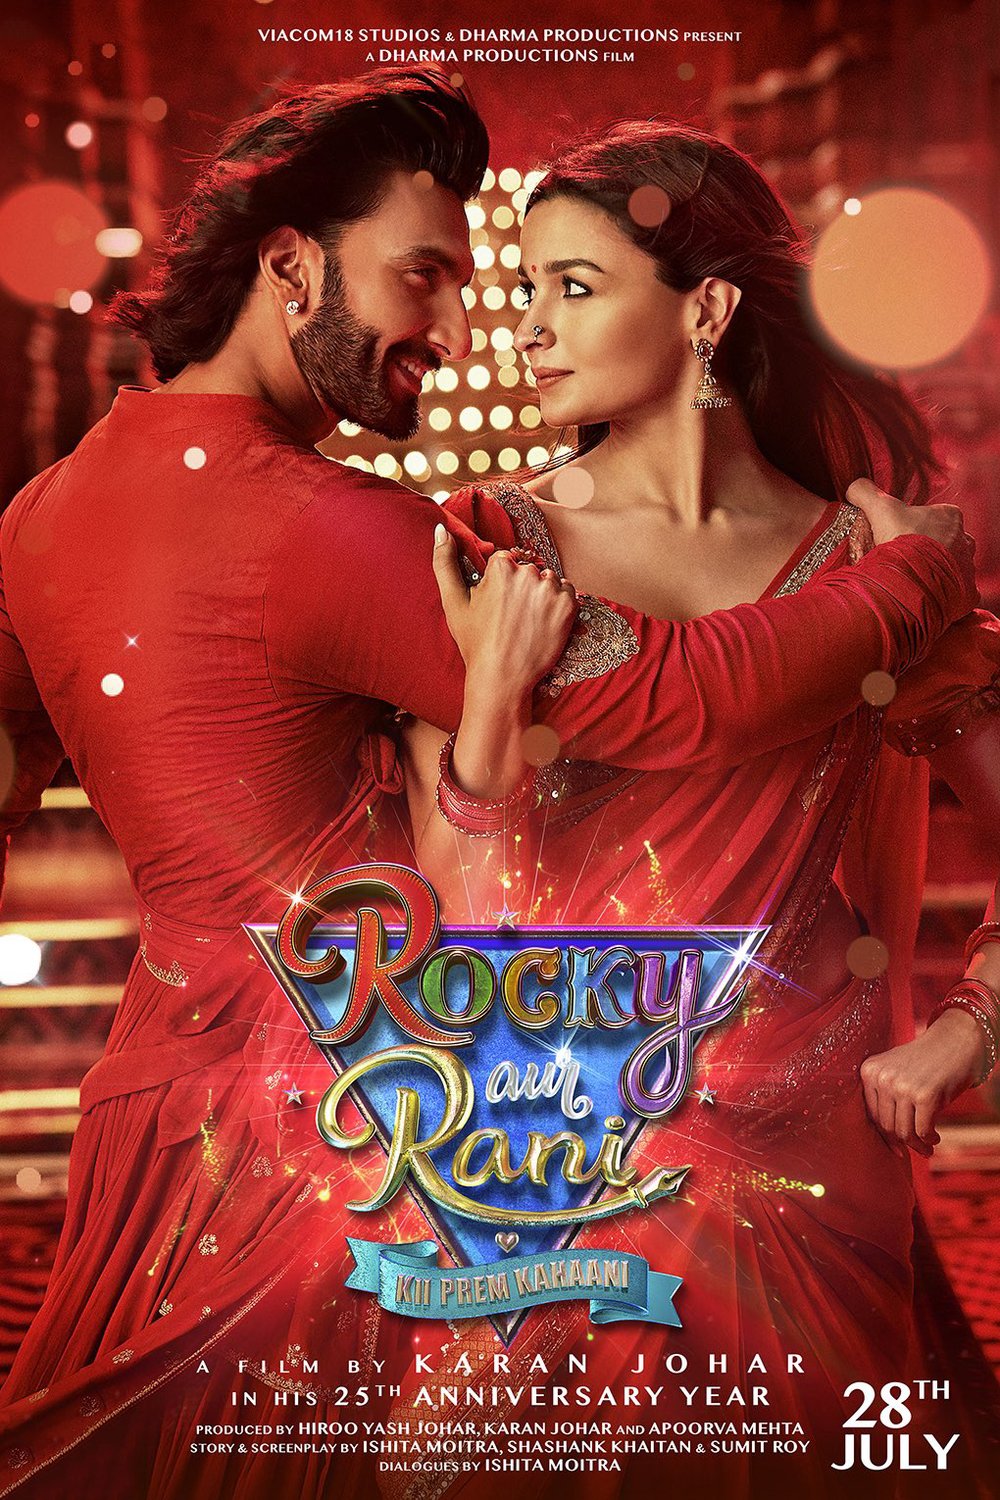 Hindi poster of the movie Rocky Aur Rani Kii Prem Kahaani